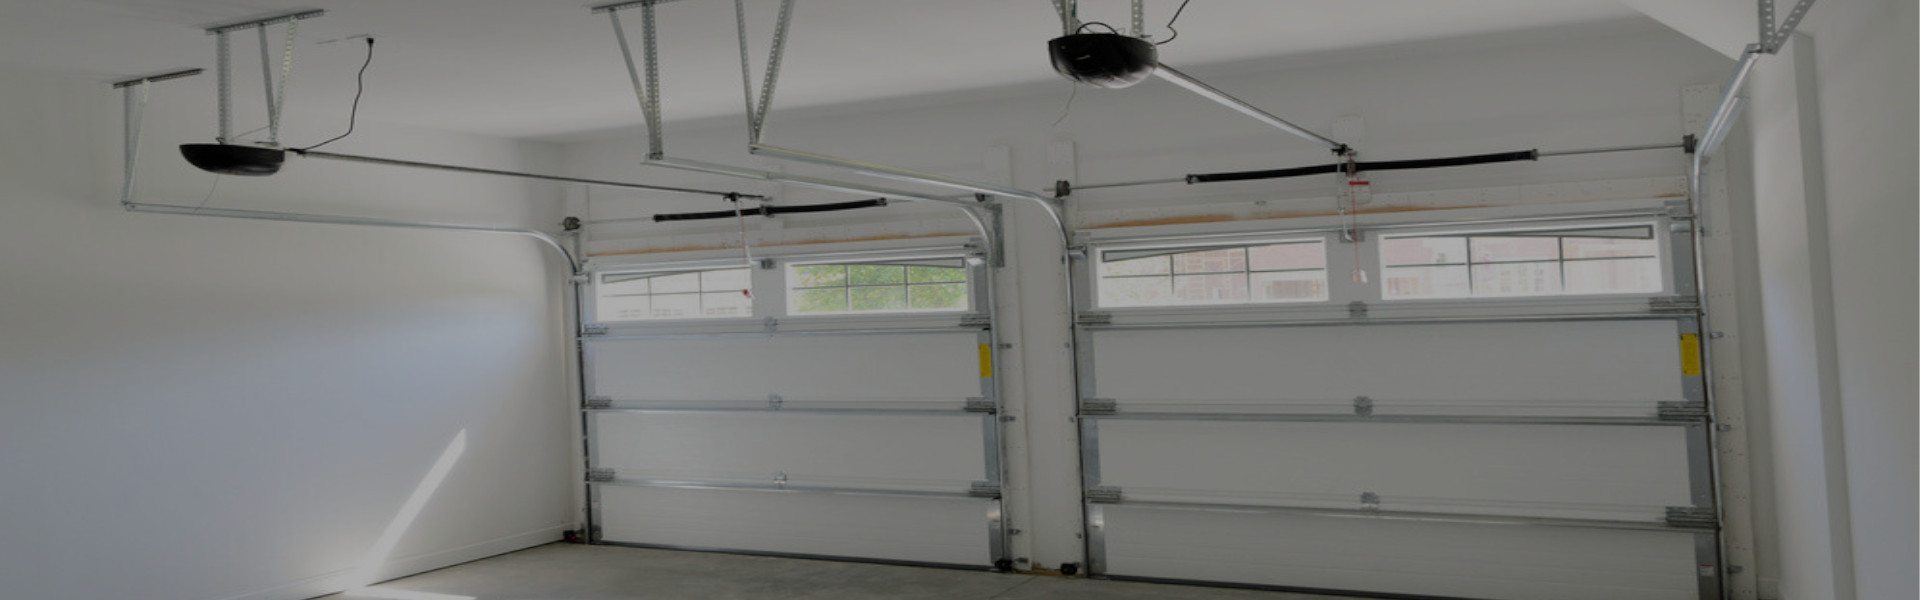 Slider Garage Door Repair, Glaziers in West Horsley, East Horsley, Effingham, KT24